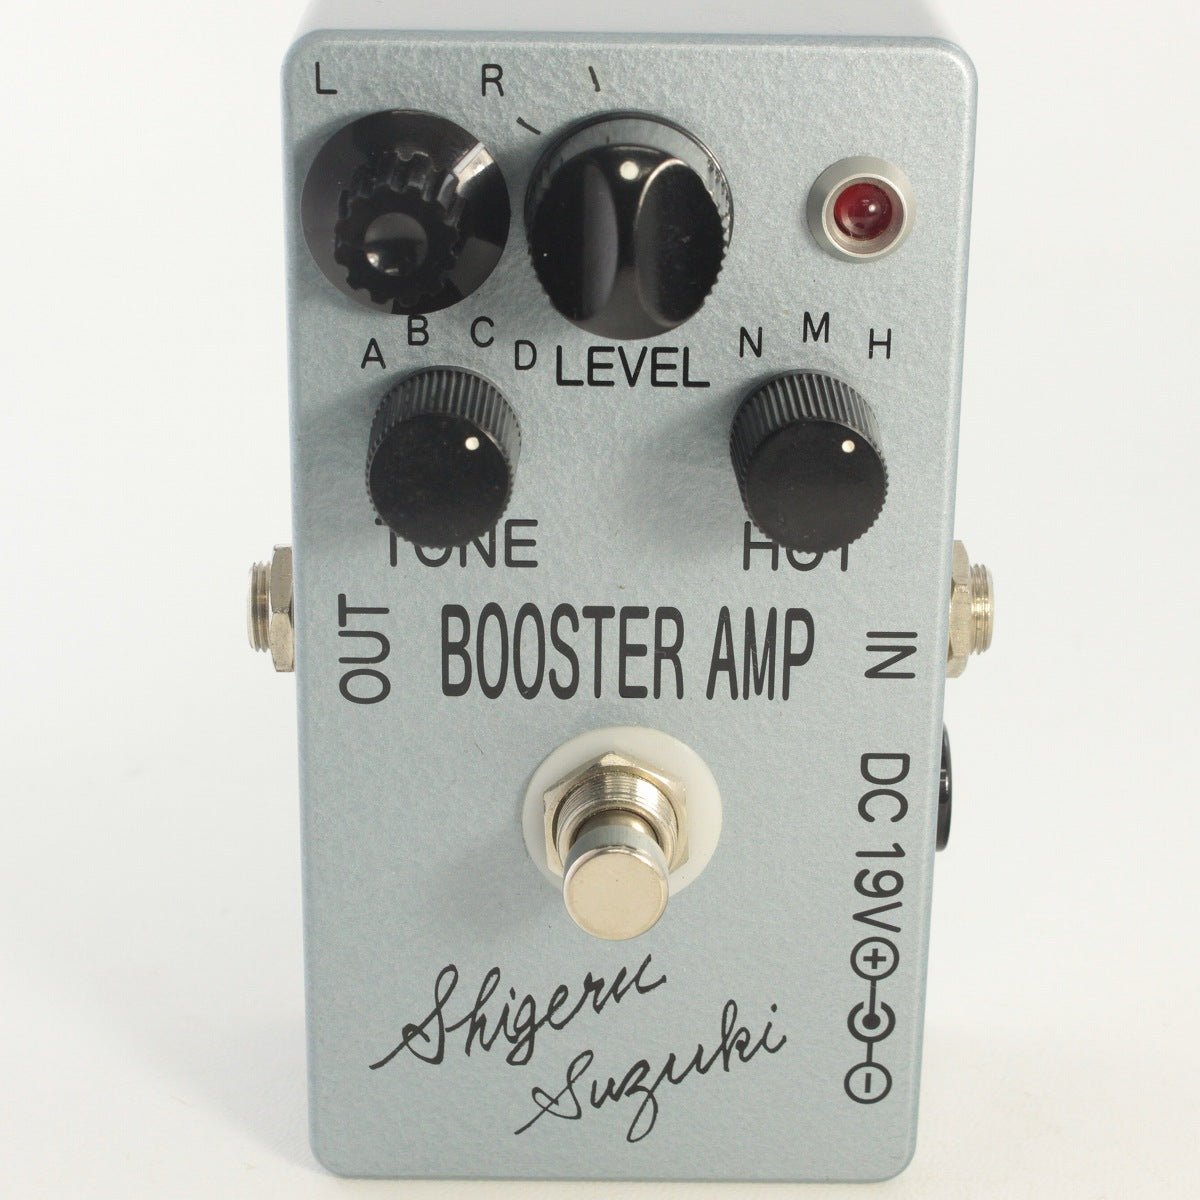 USED Shigeru Suzuki / Booster Amp B-1 [03]